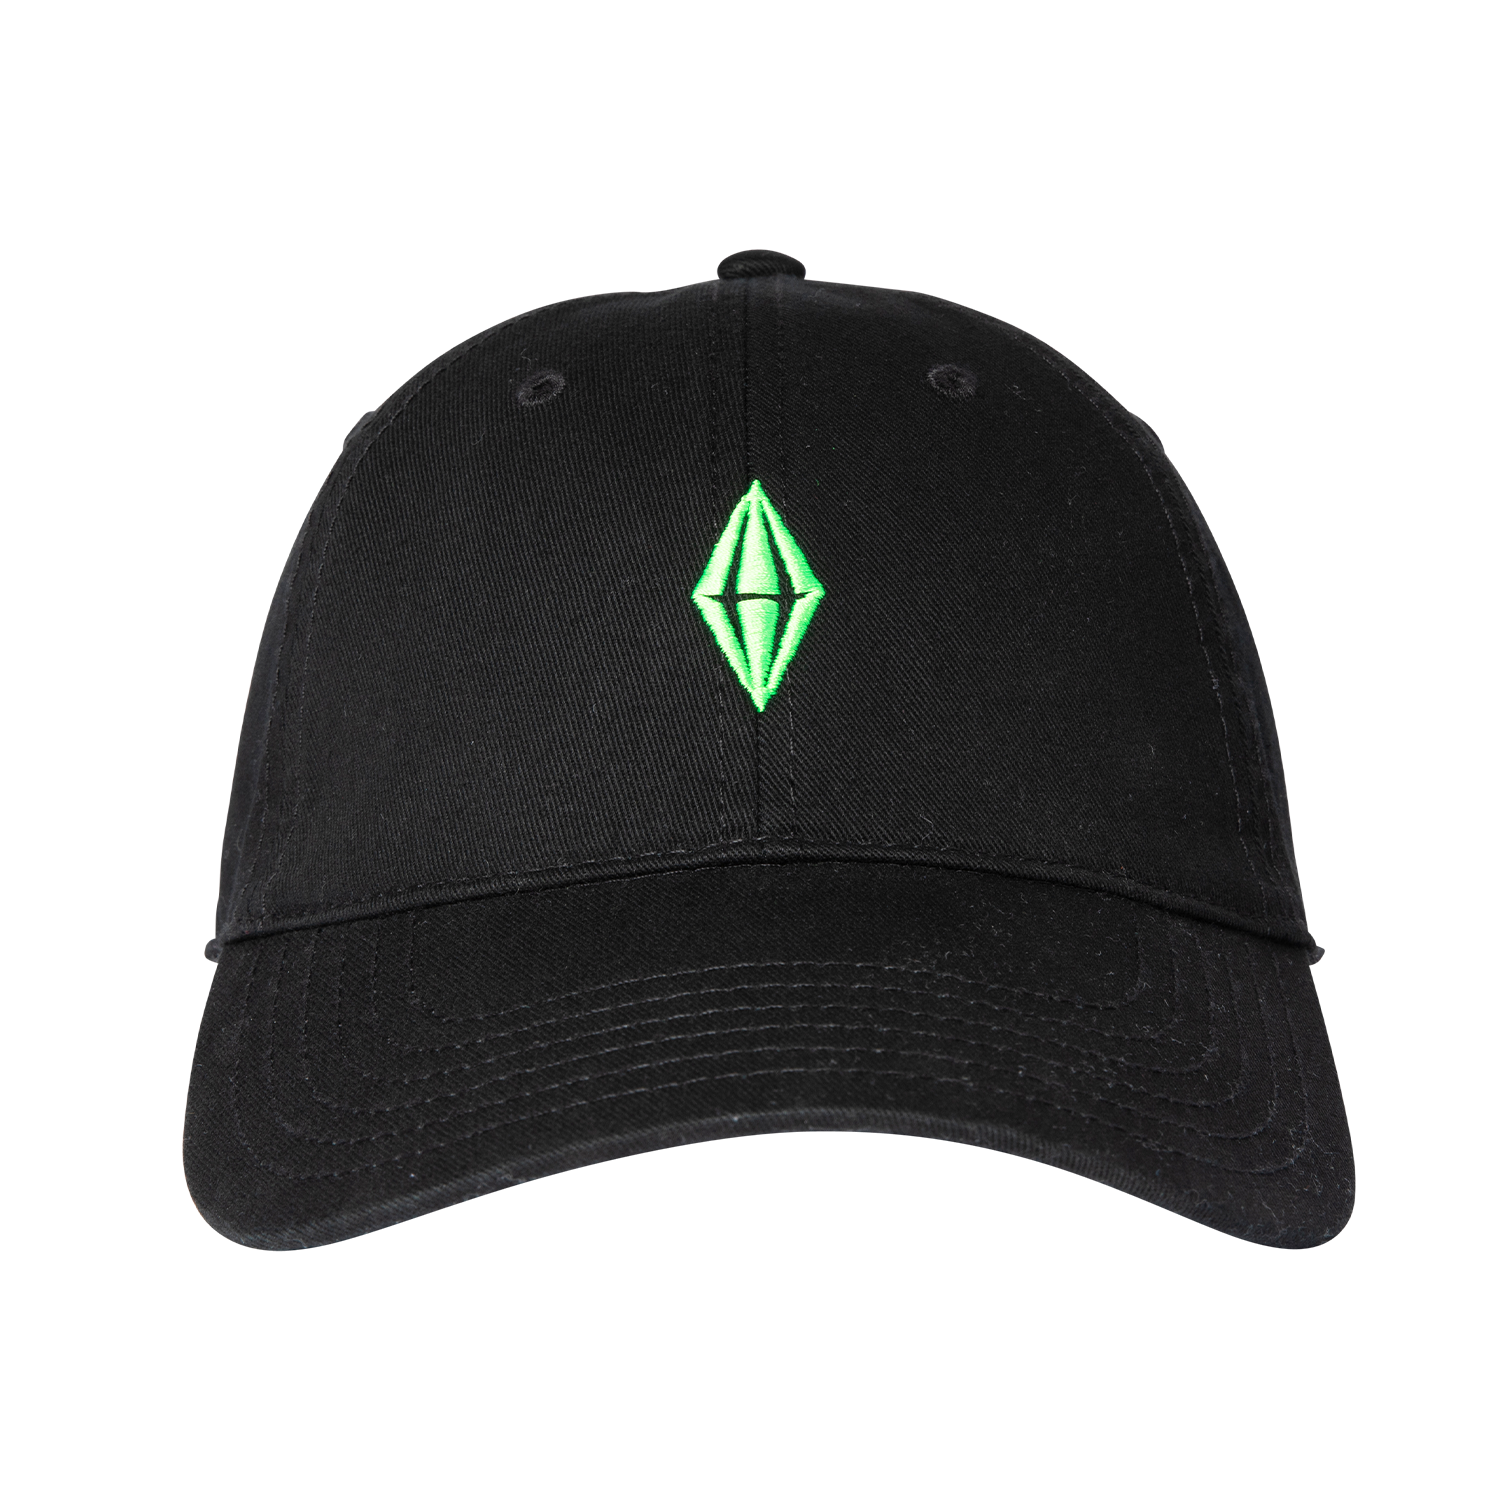 The Sims™ Plumbob Hat - Black